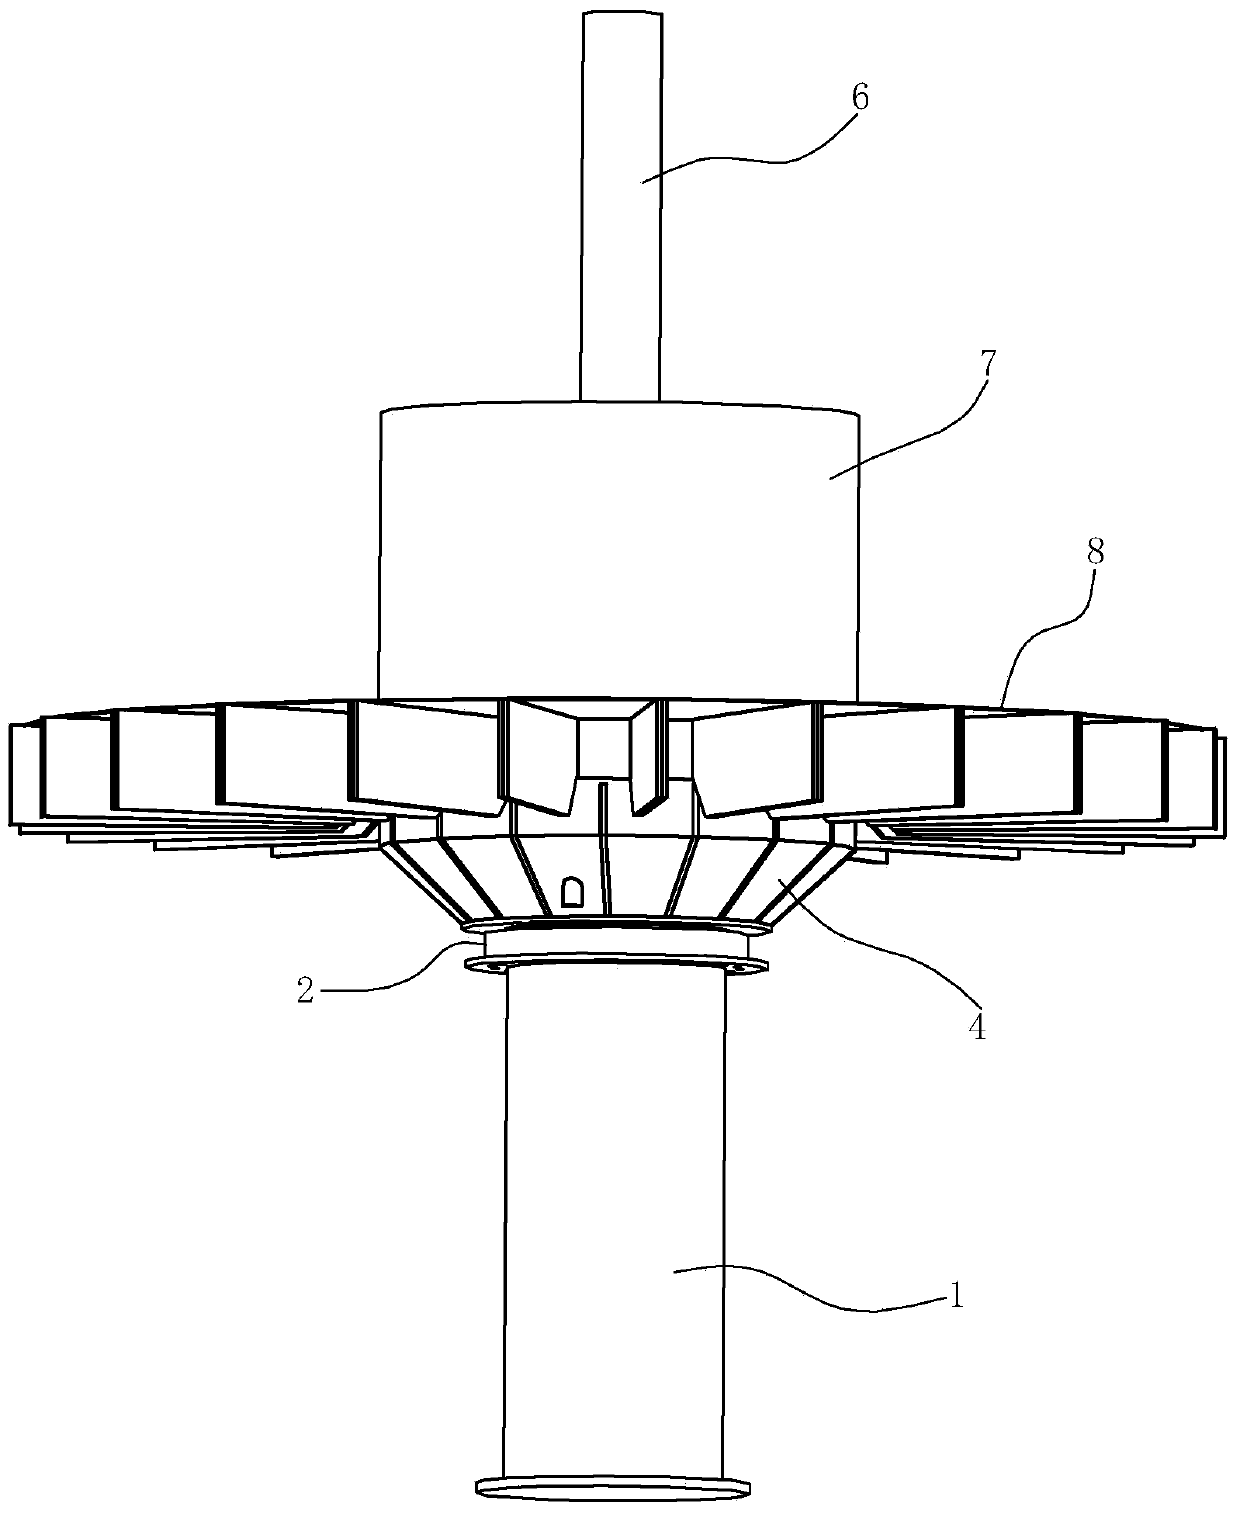 Rotary structure of starter-making machine